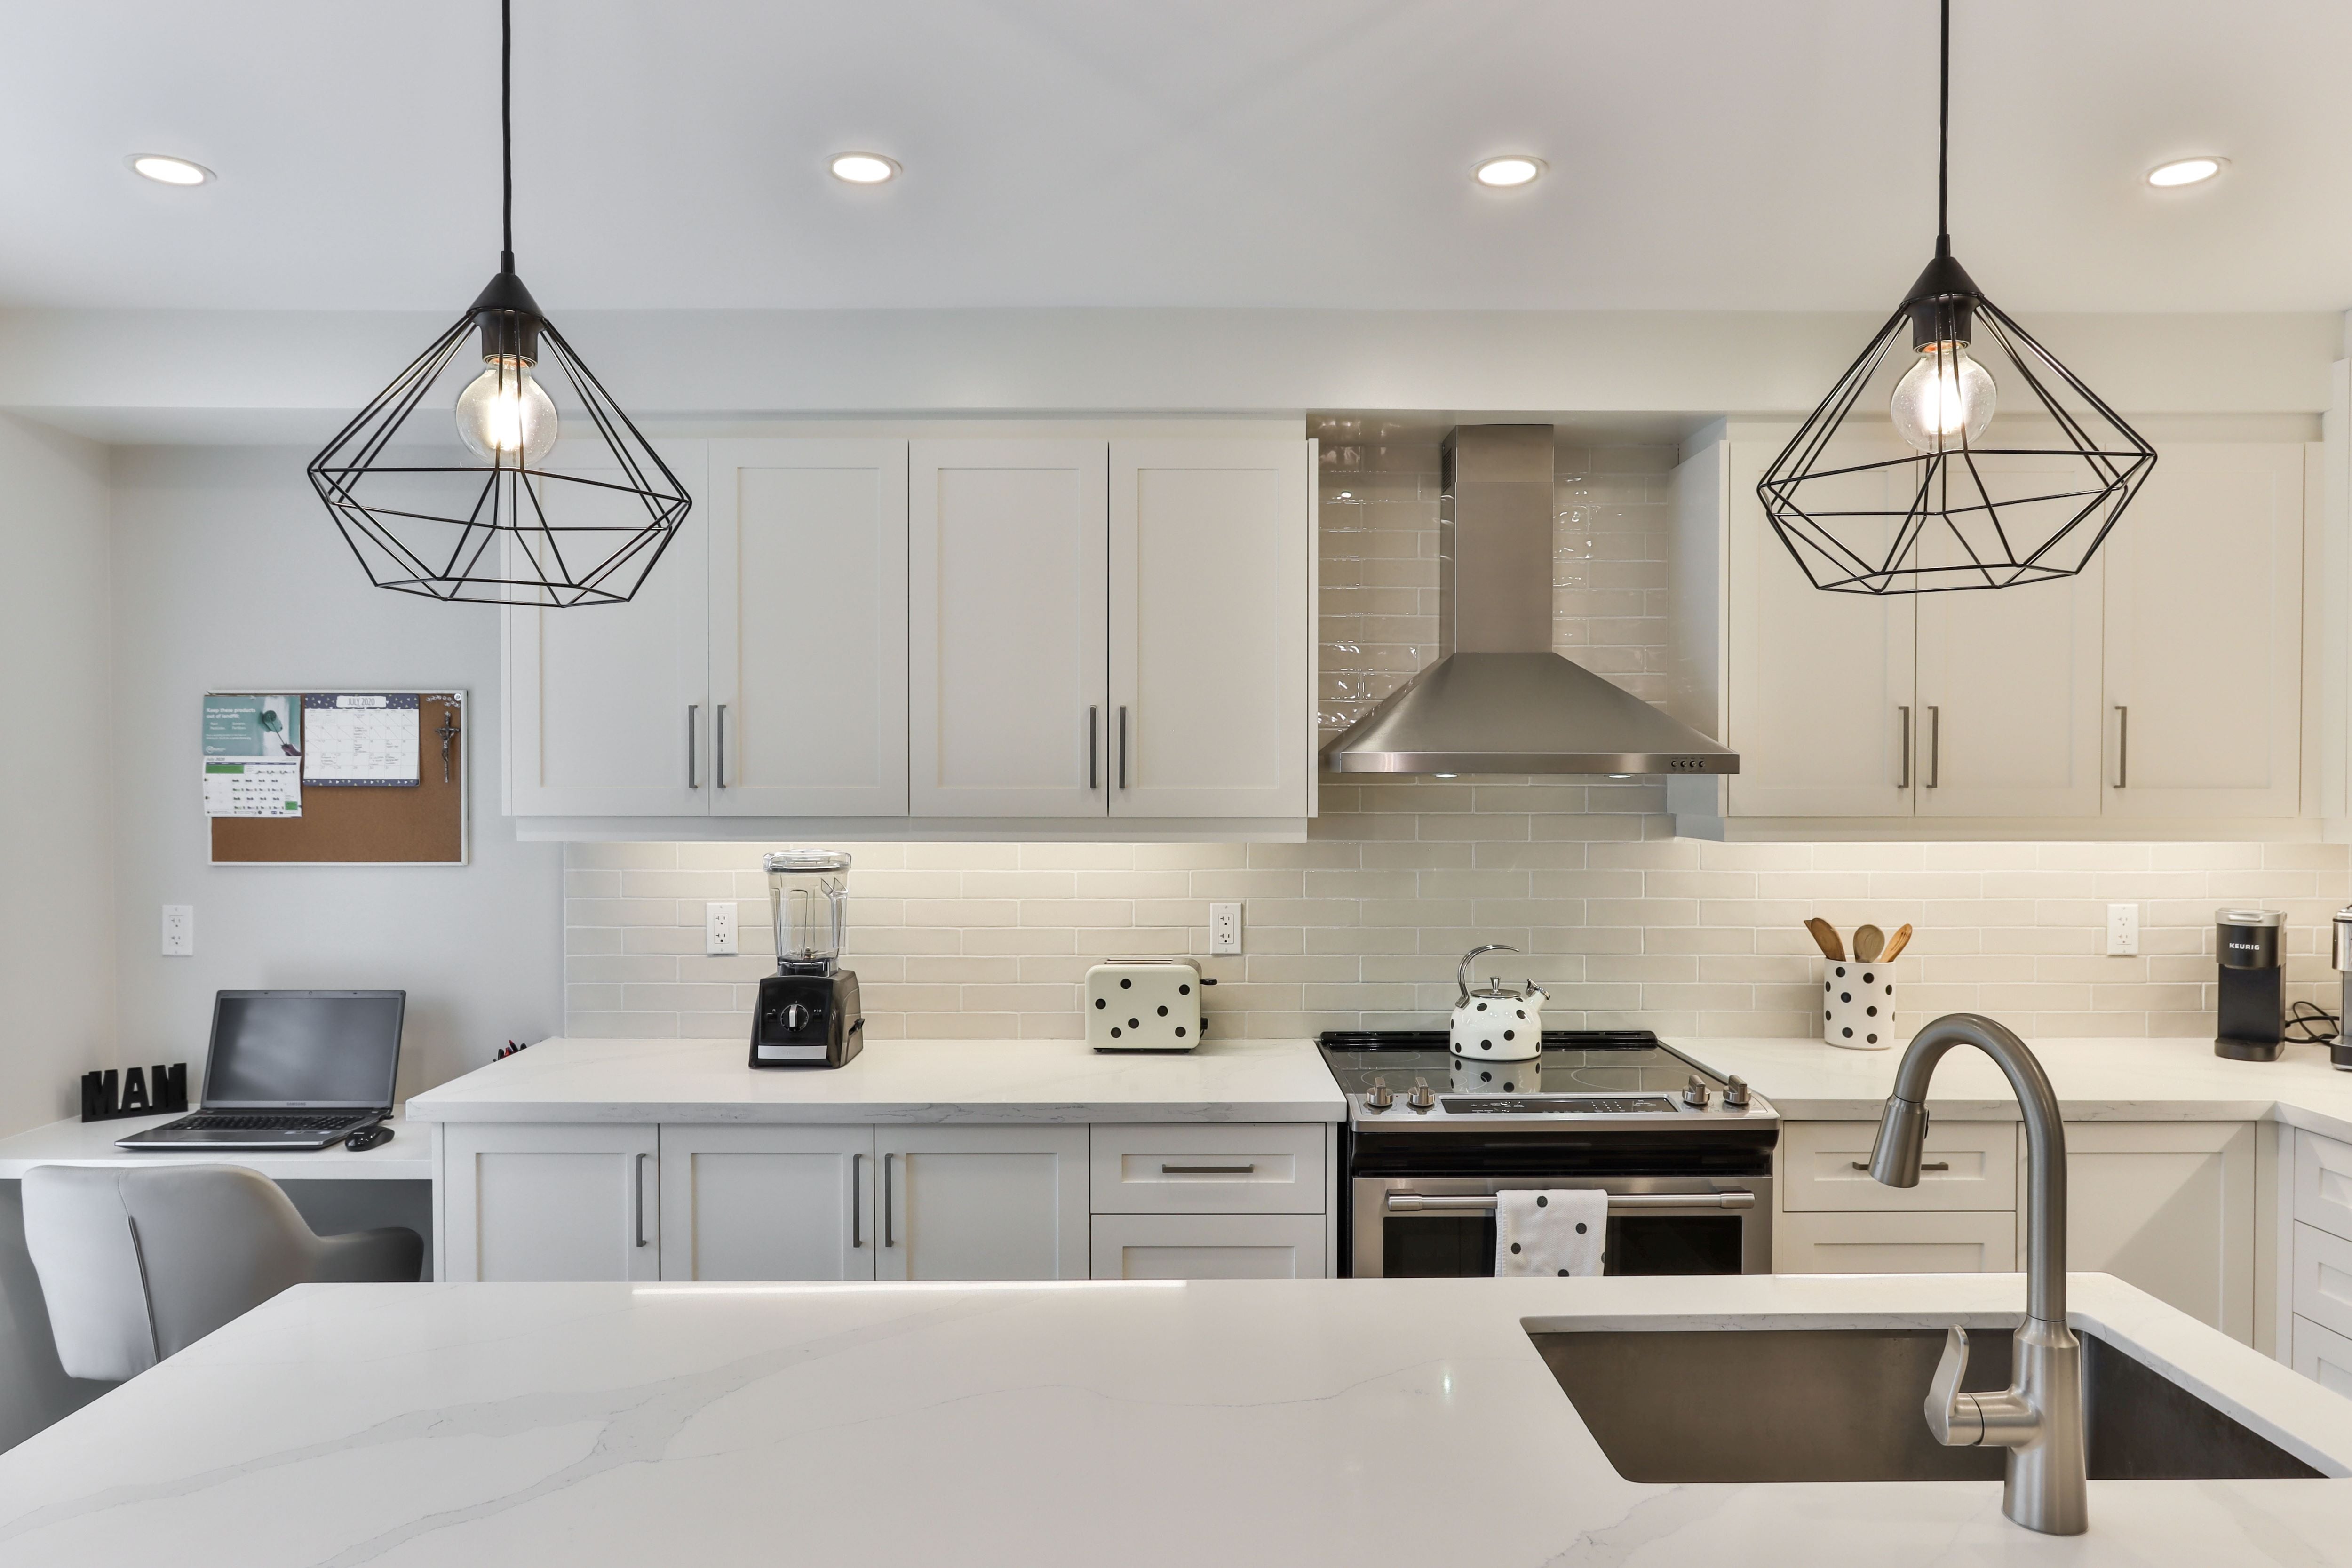 kitchen lighting - kitchen design and renovation